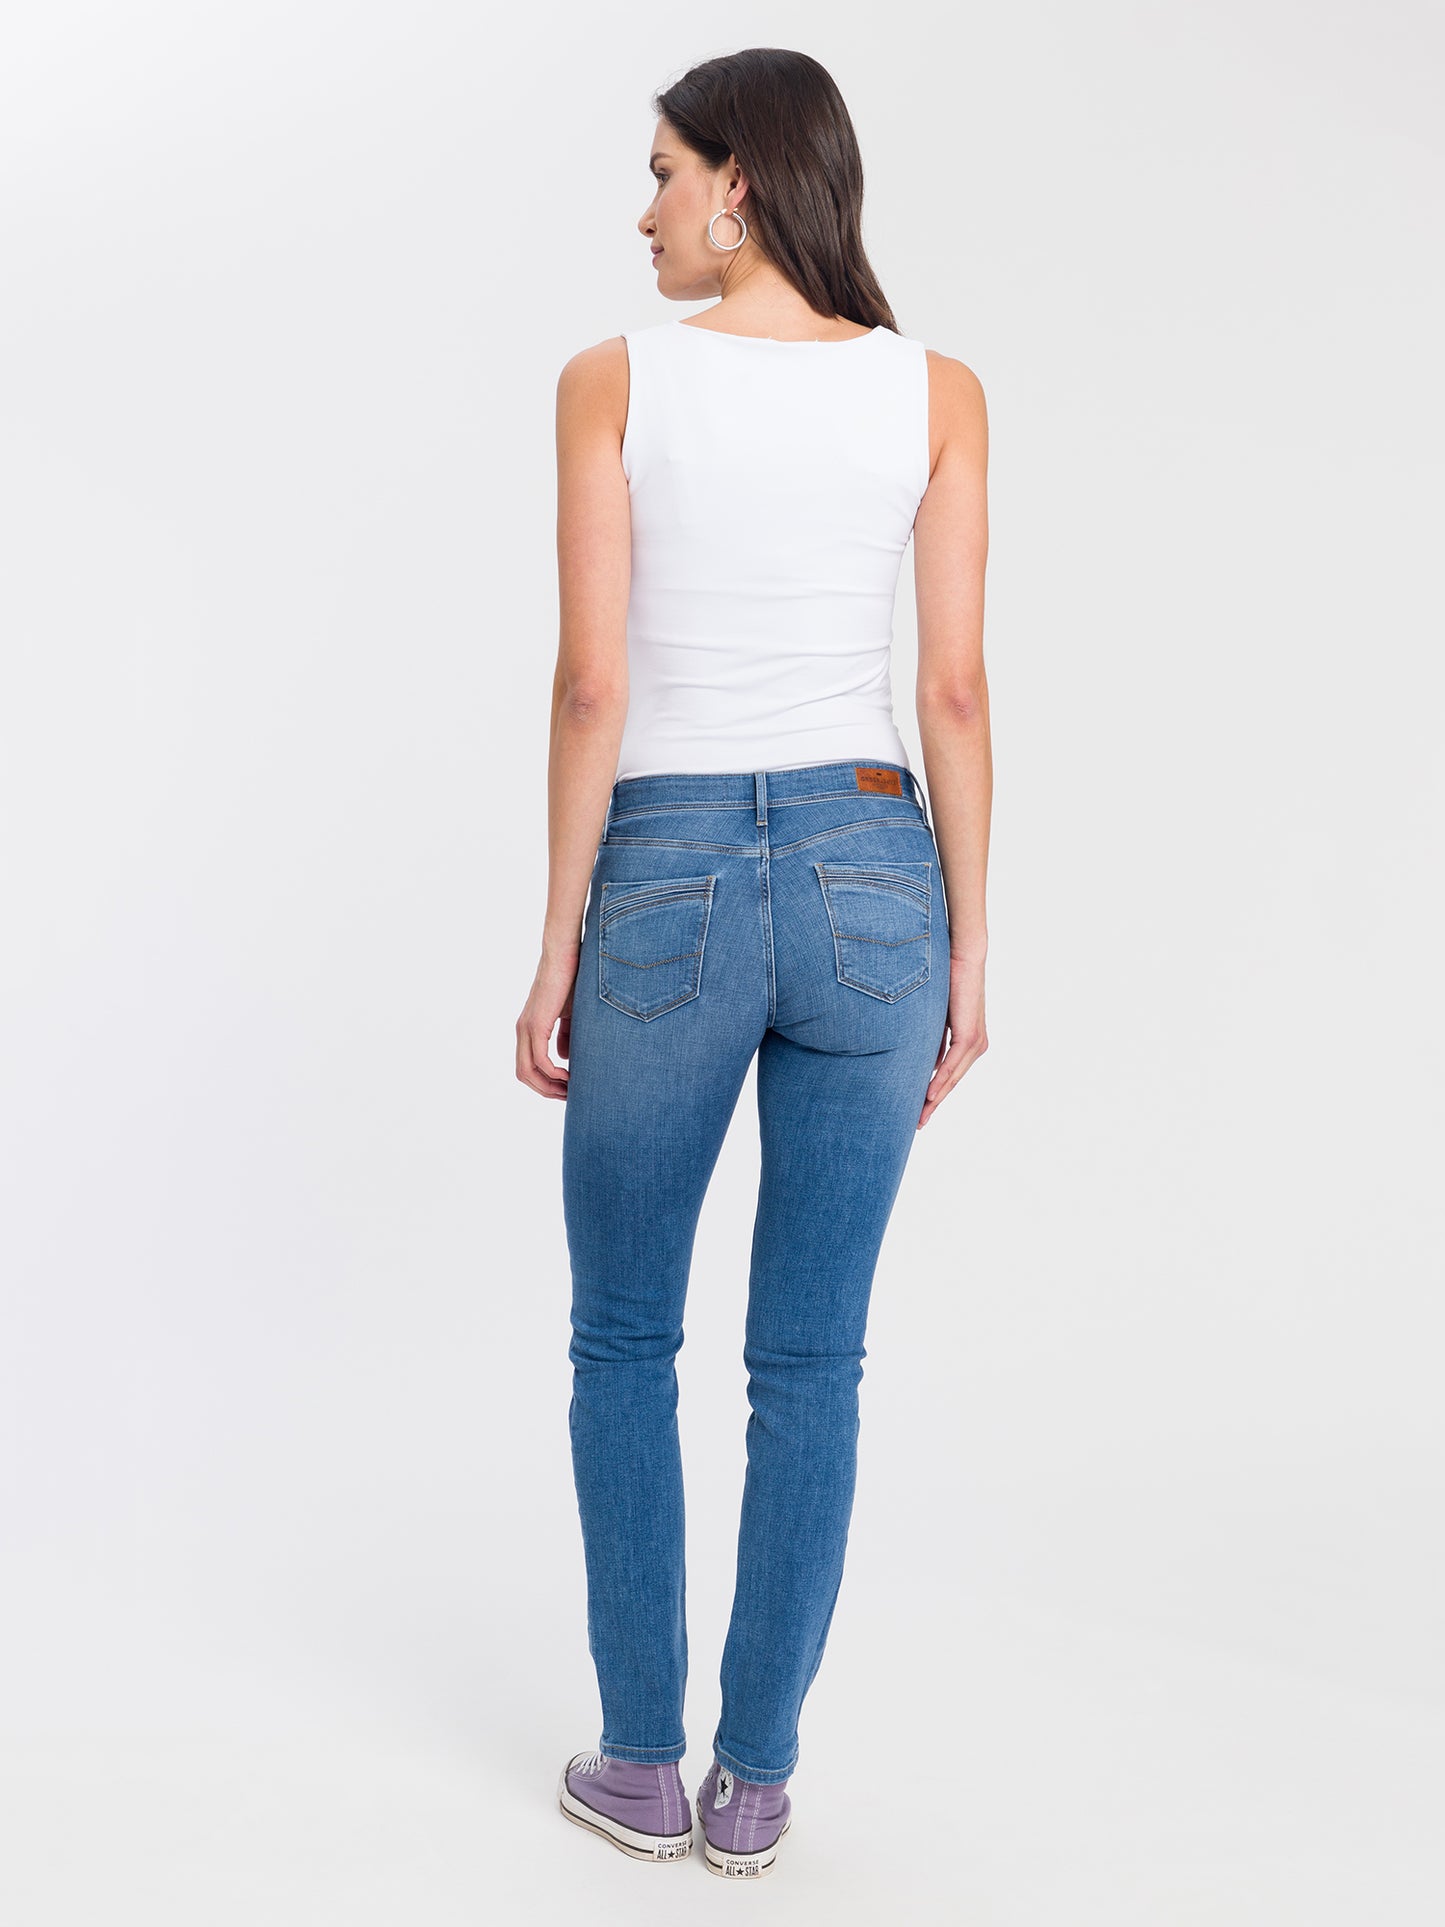 Anya women's jeans slim fit high waist blue